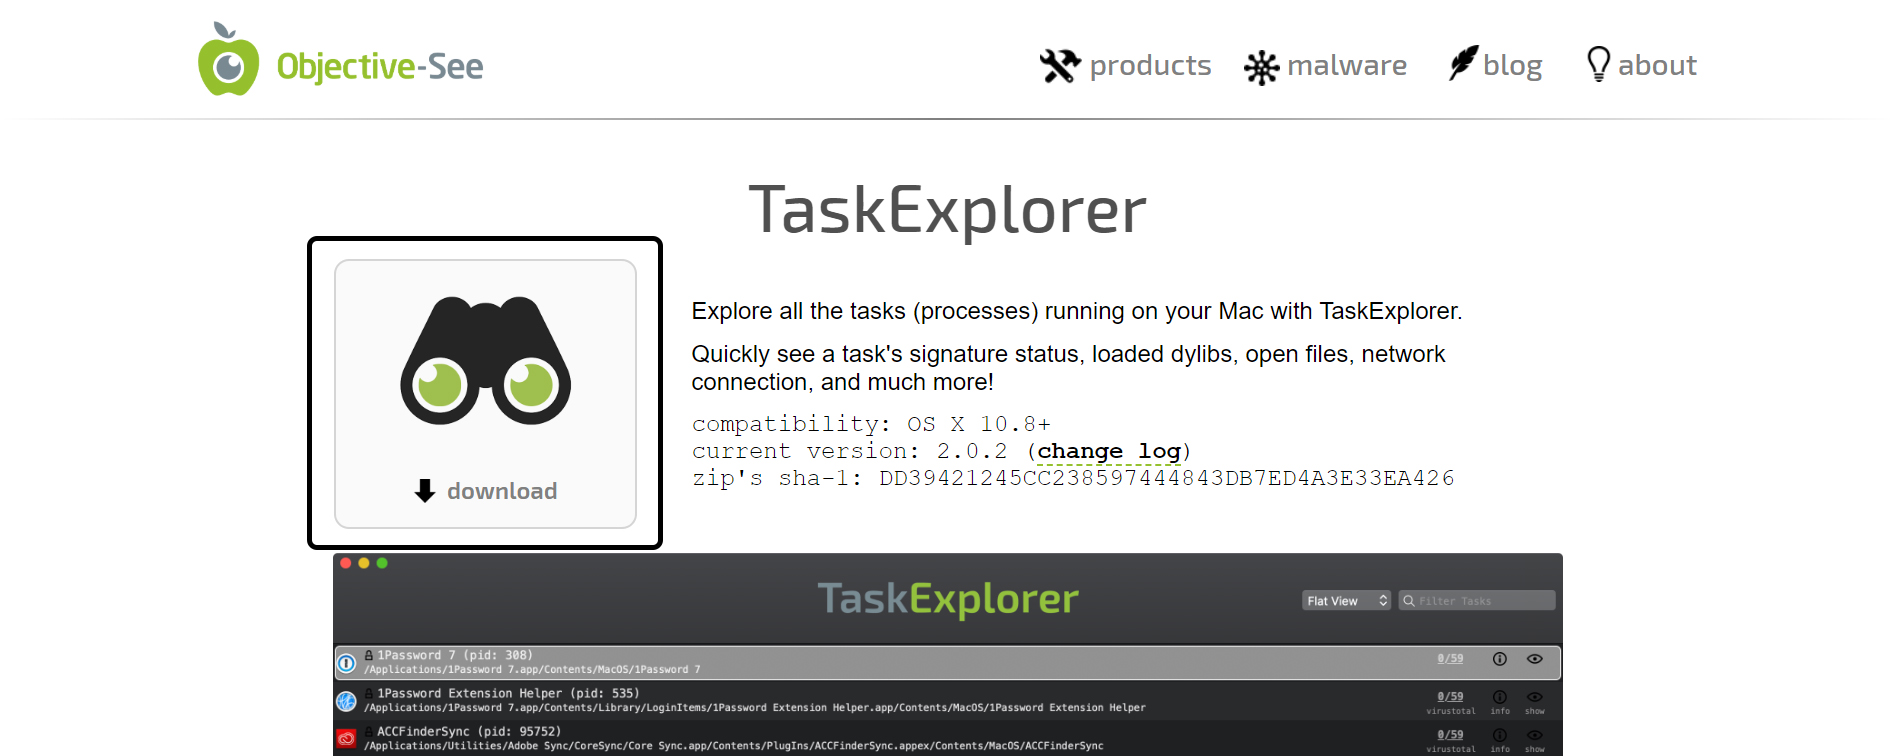 Task Explorer 1.5.3 download the new version for apple